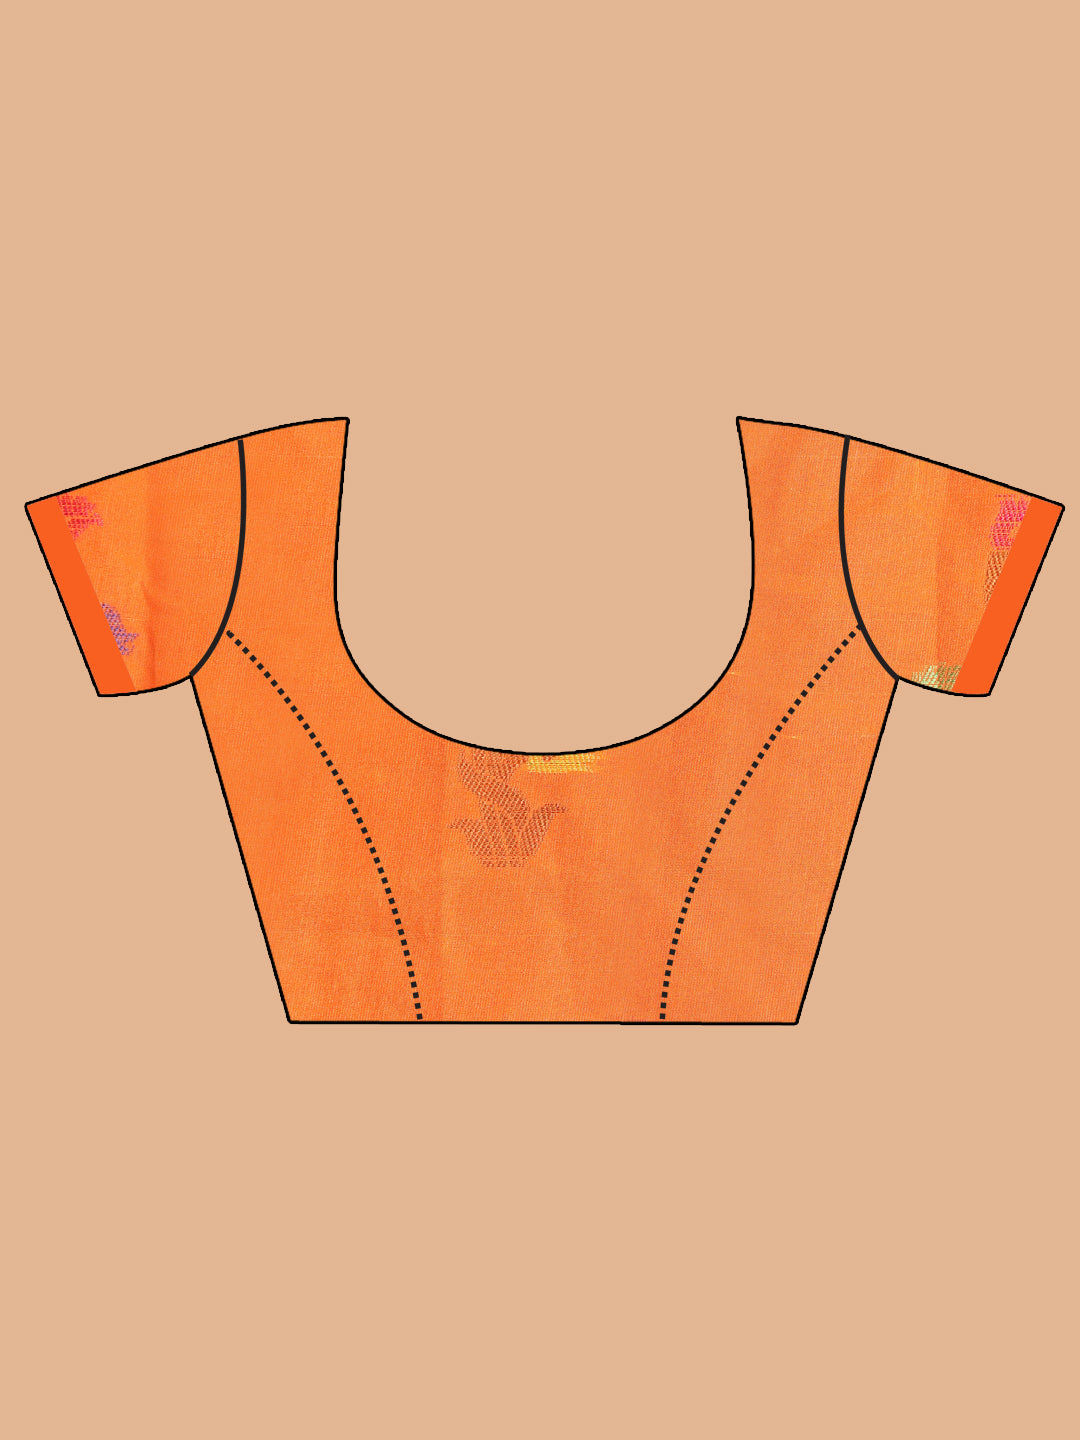 Indethnic Orange Woven Design Saree - Blouse Piece View